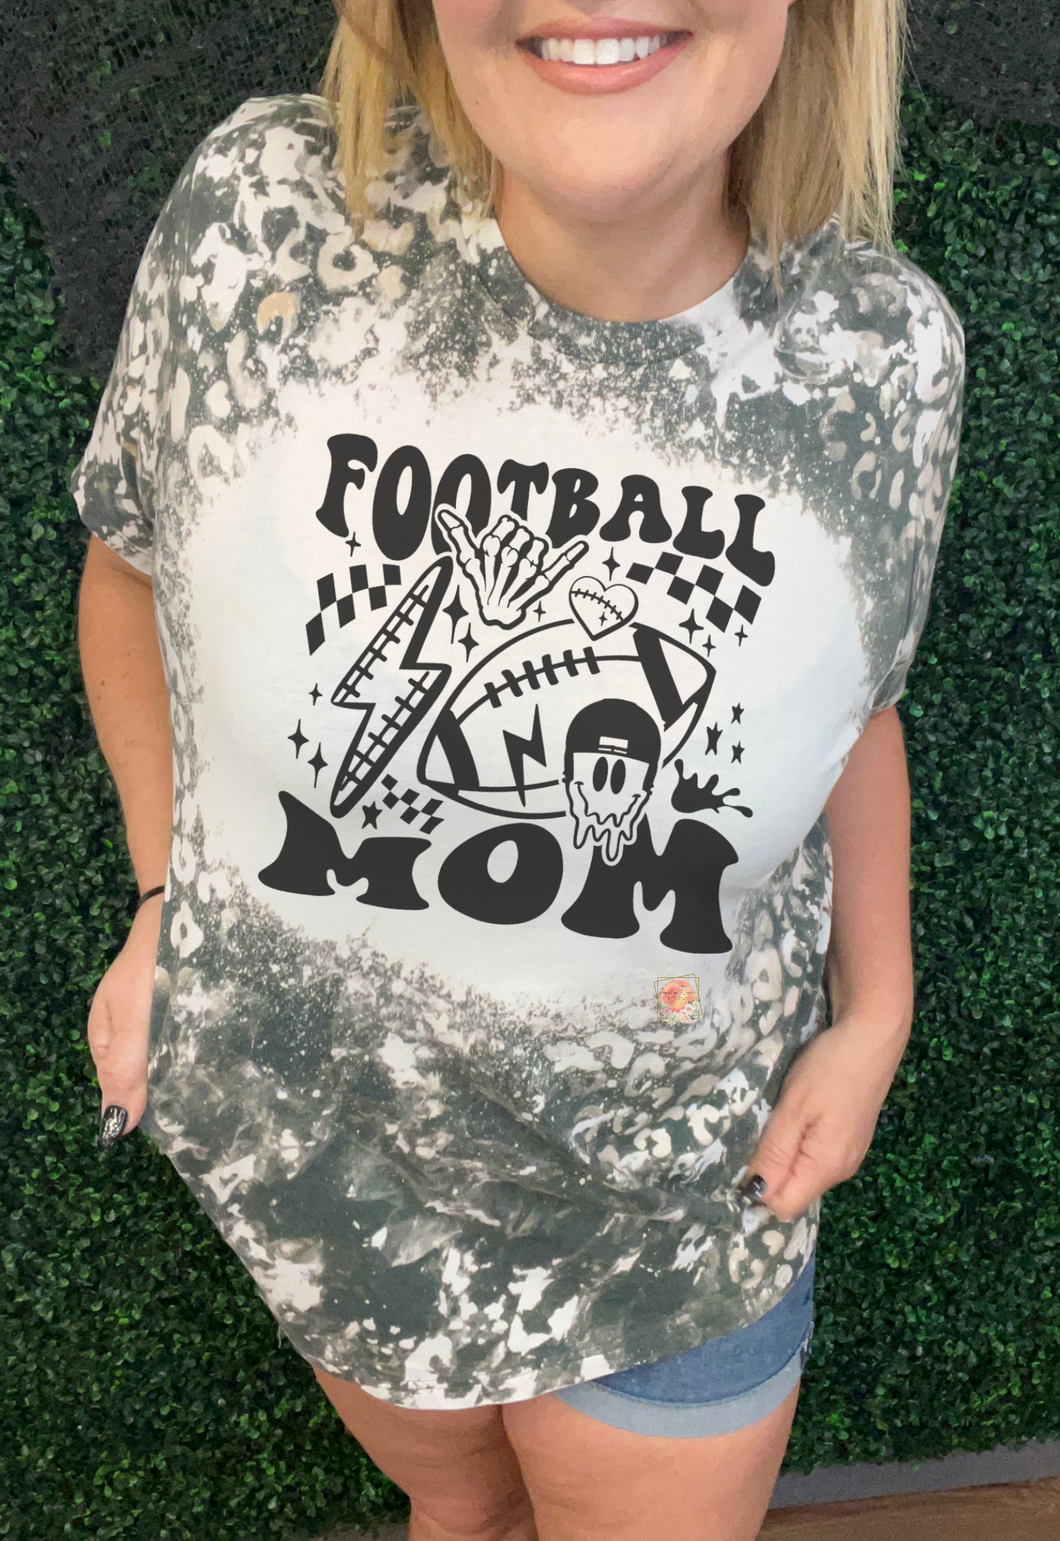 Football mom collage